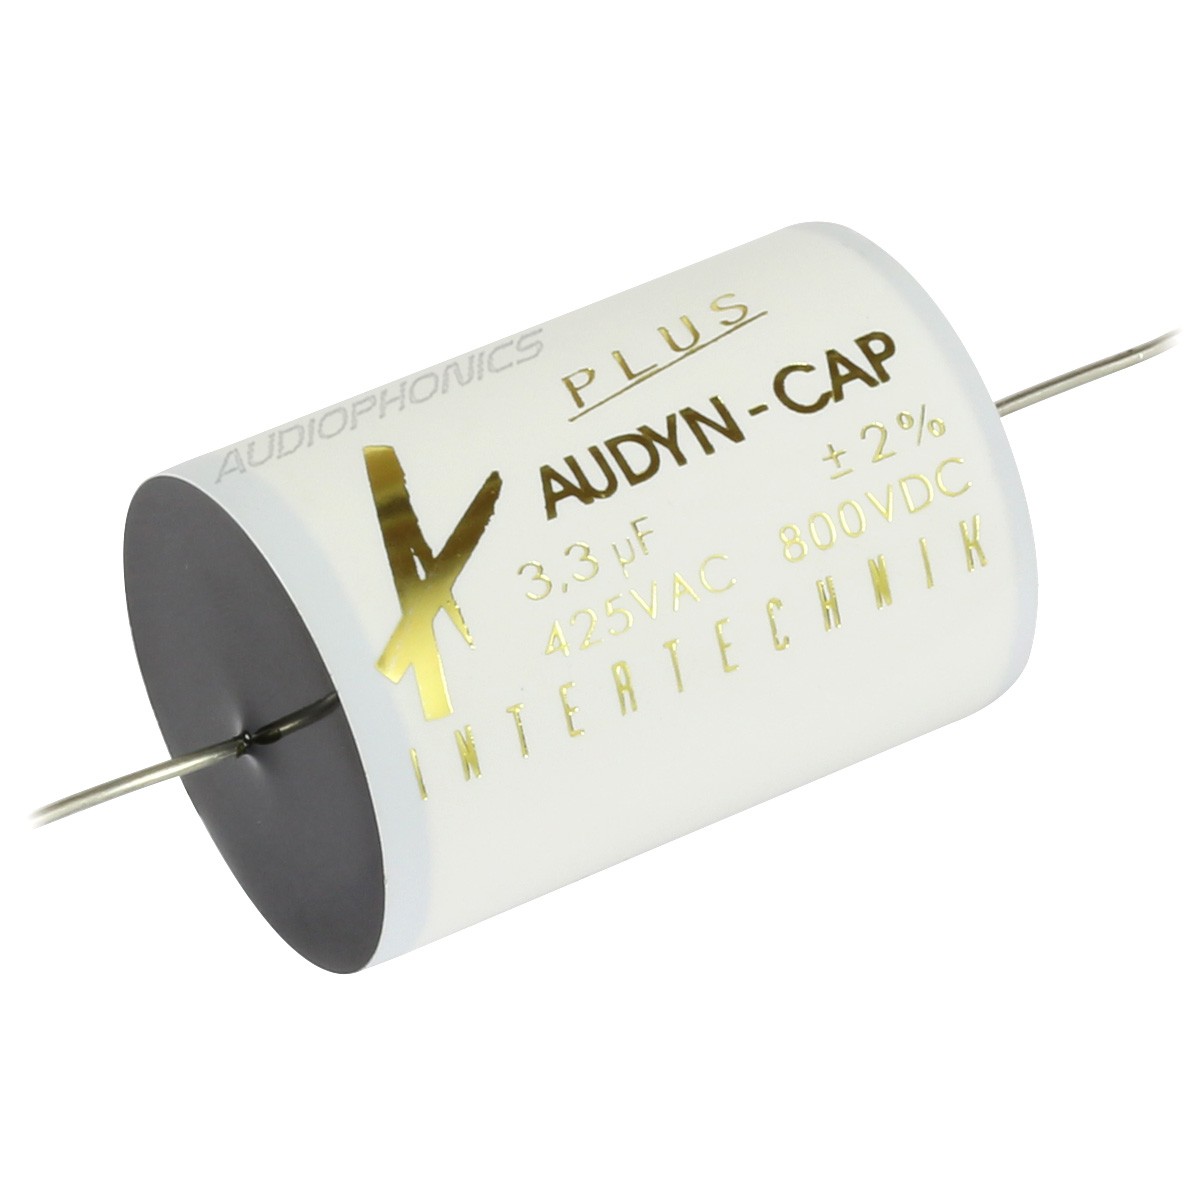 AUDYN CAP PLUS Condensateur 800V 3.3µF